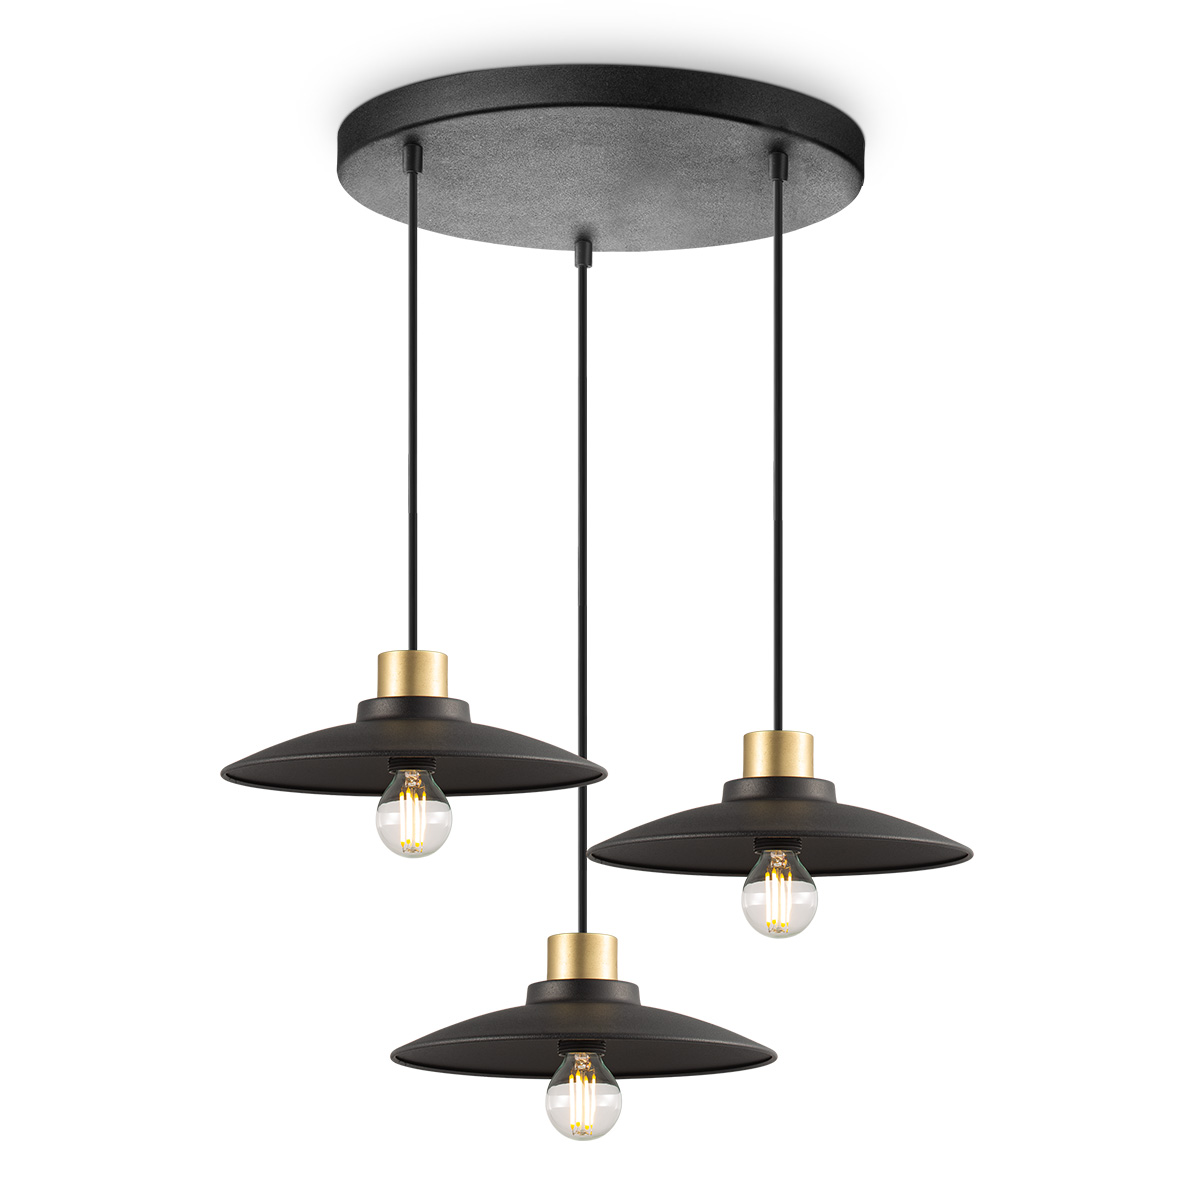 Tangla lighting - TLP7655-03RSB - LED pendant lamp 3 lights - round metal decorative lighting - modern - black cirque series